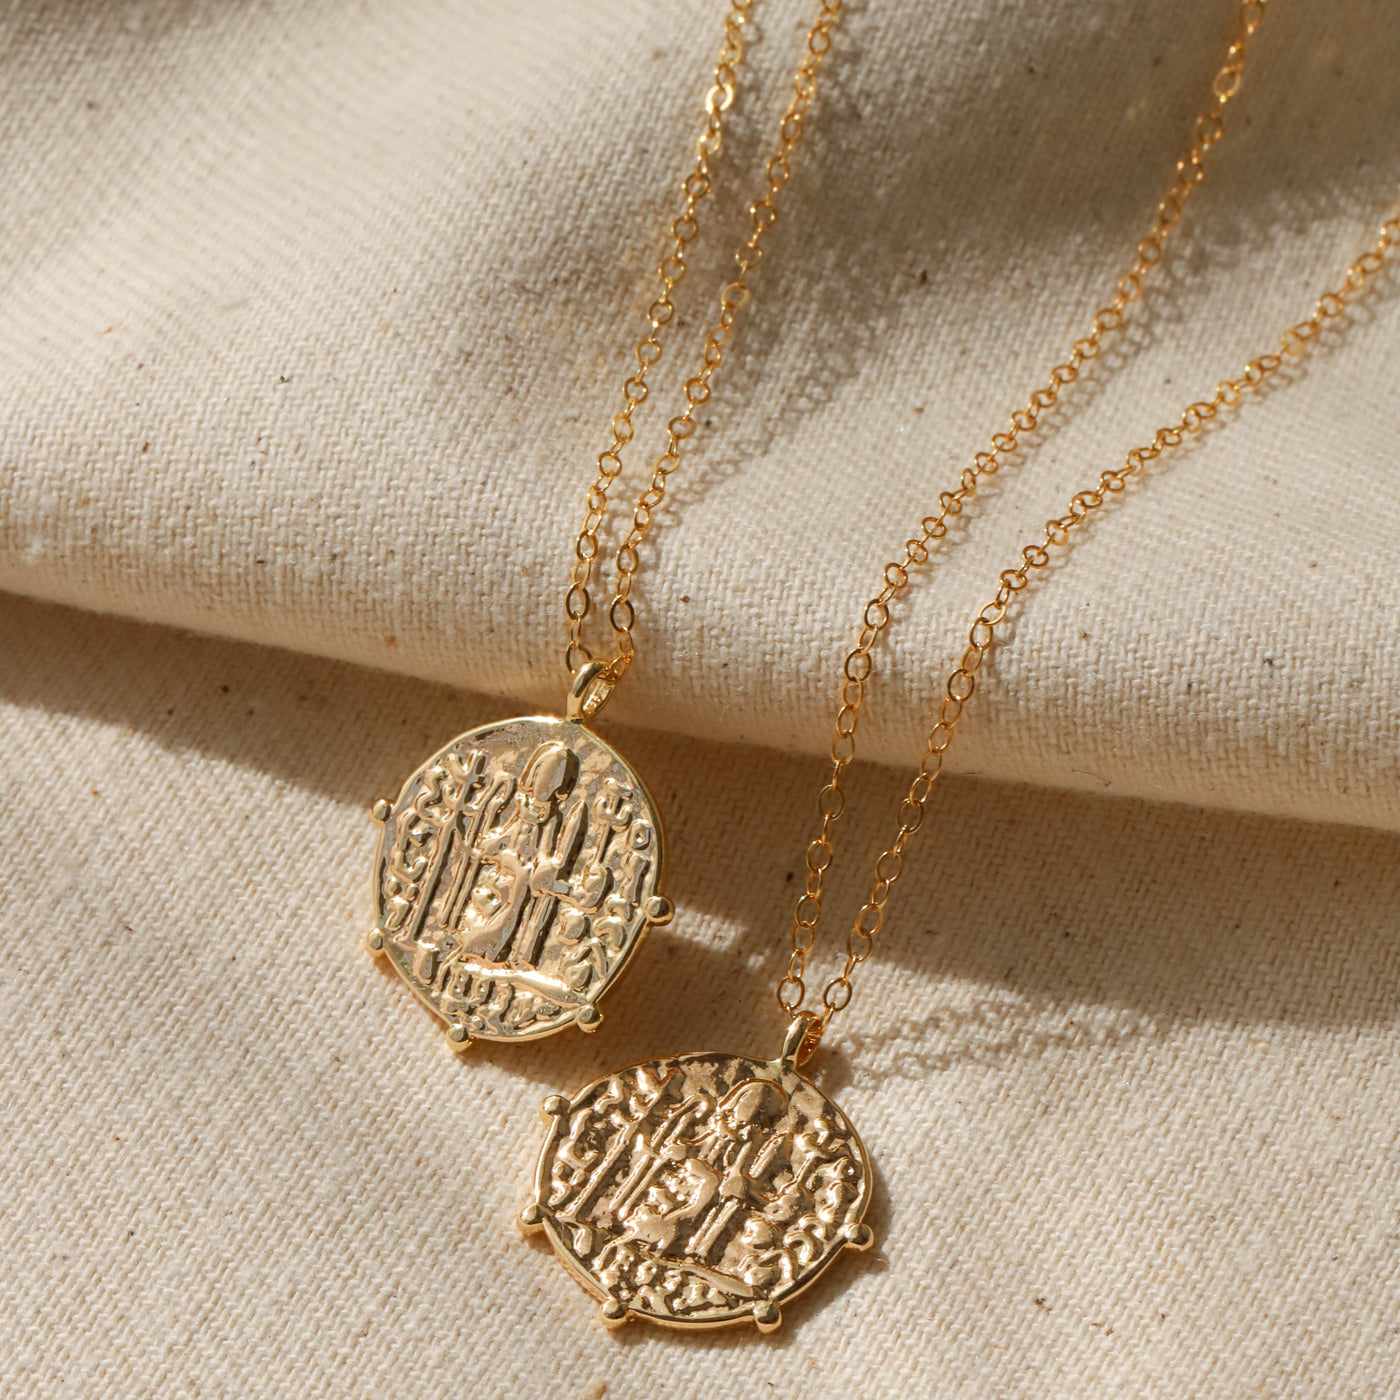 Gold coin pendant necklaces